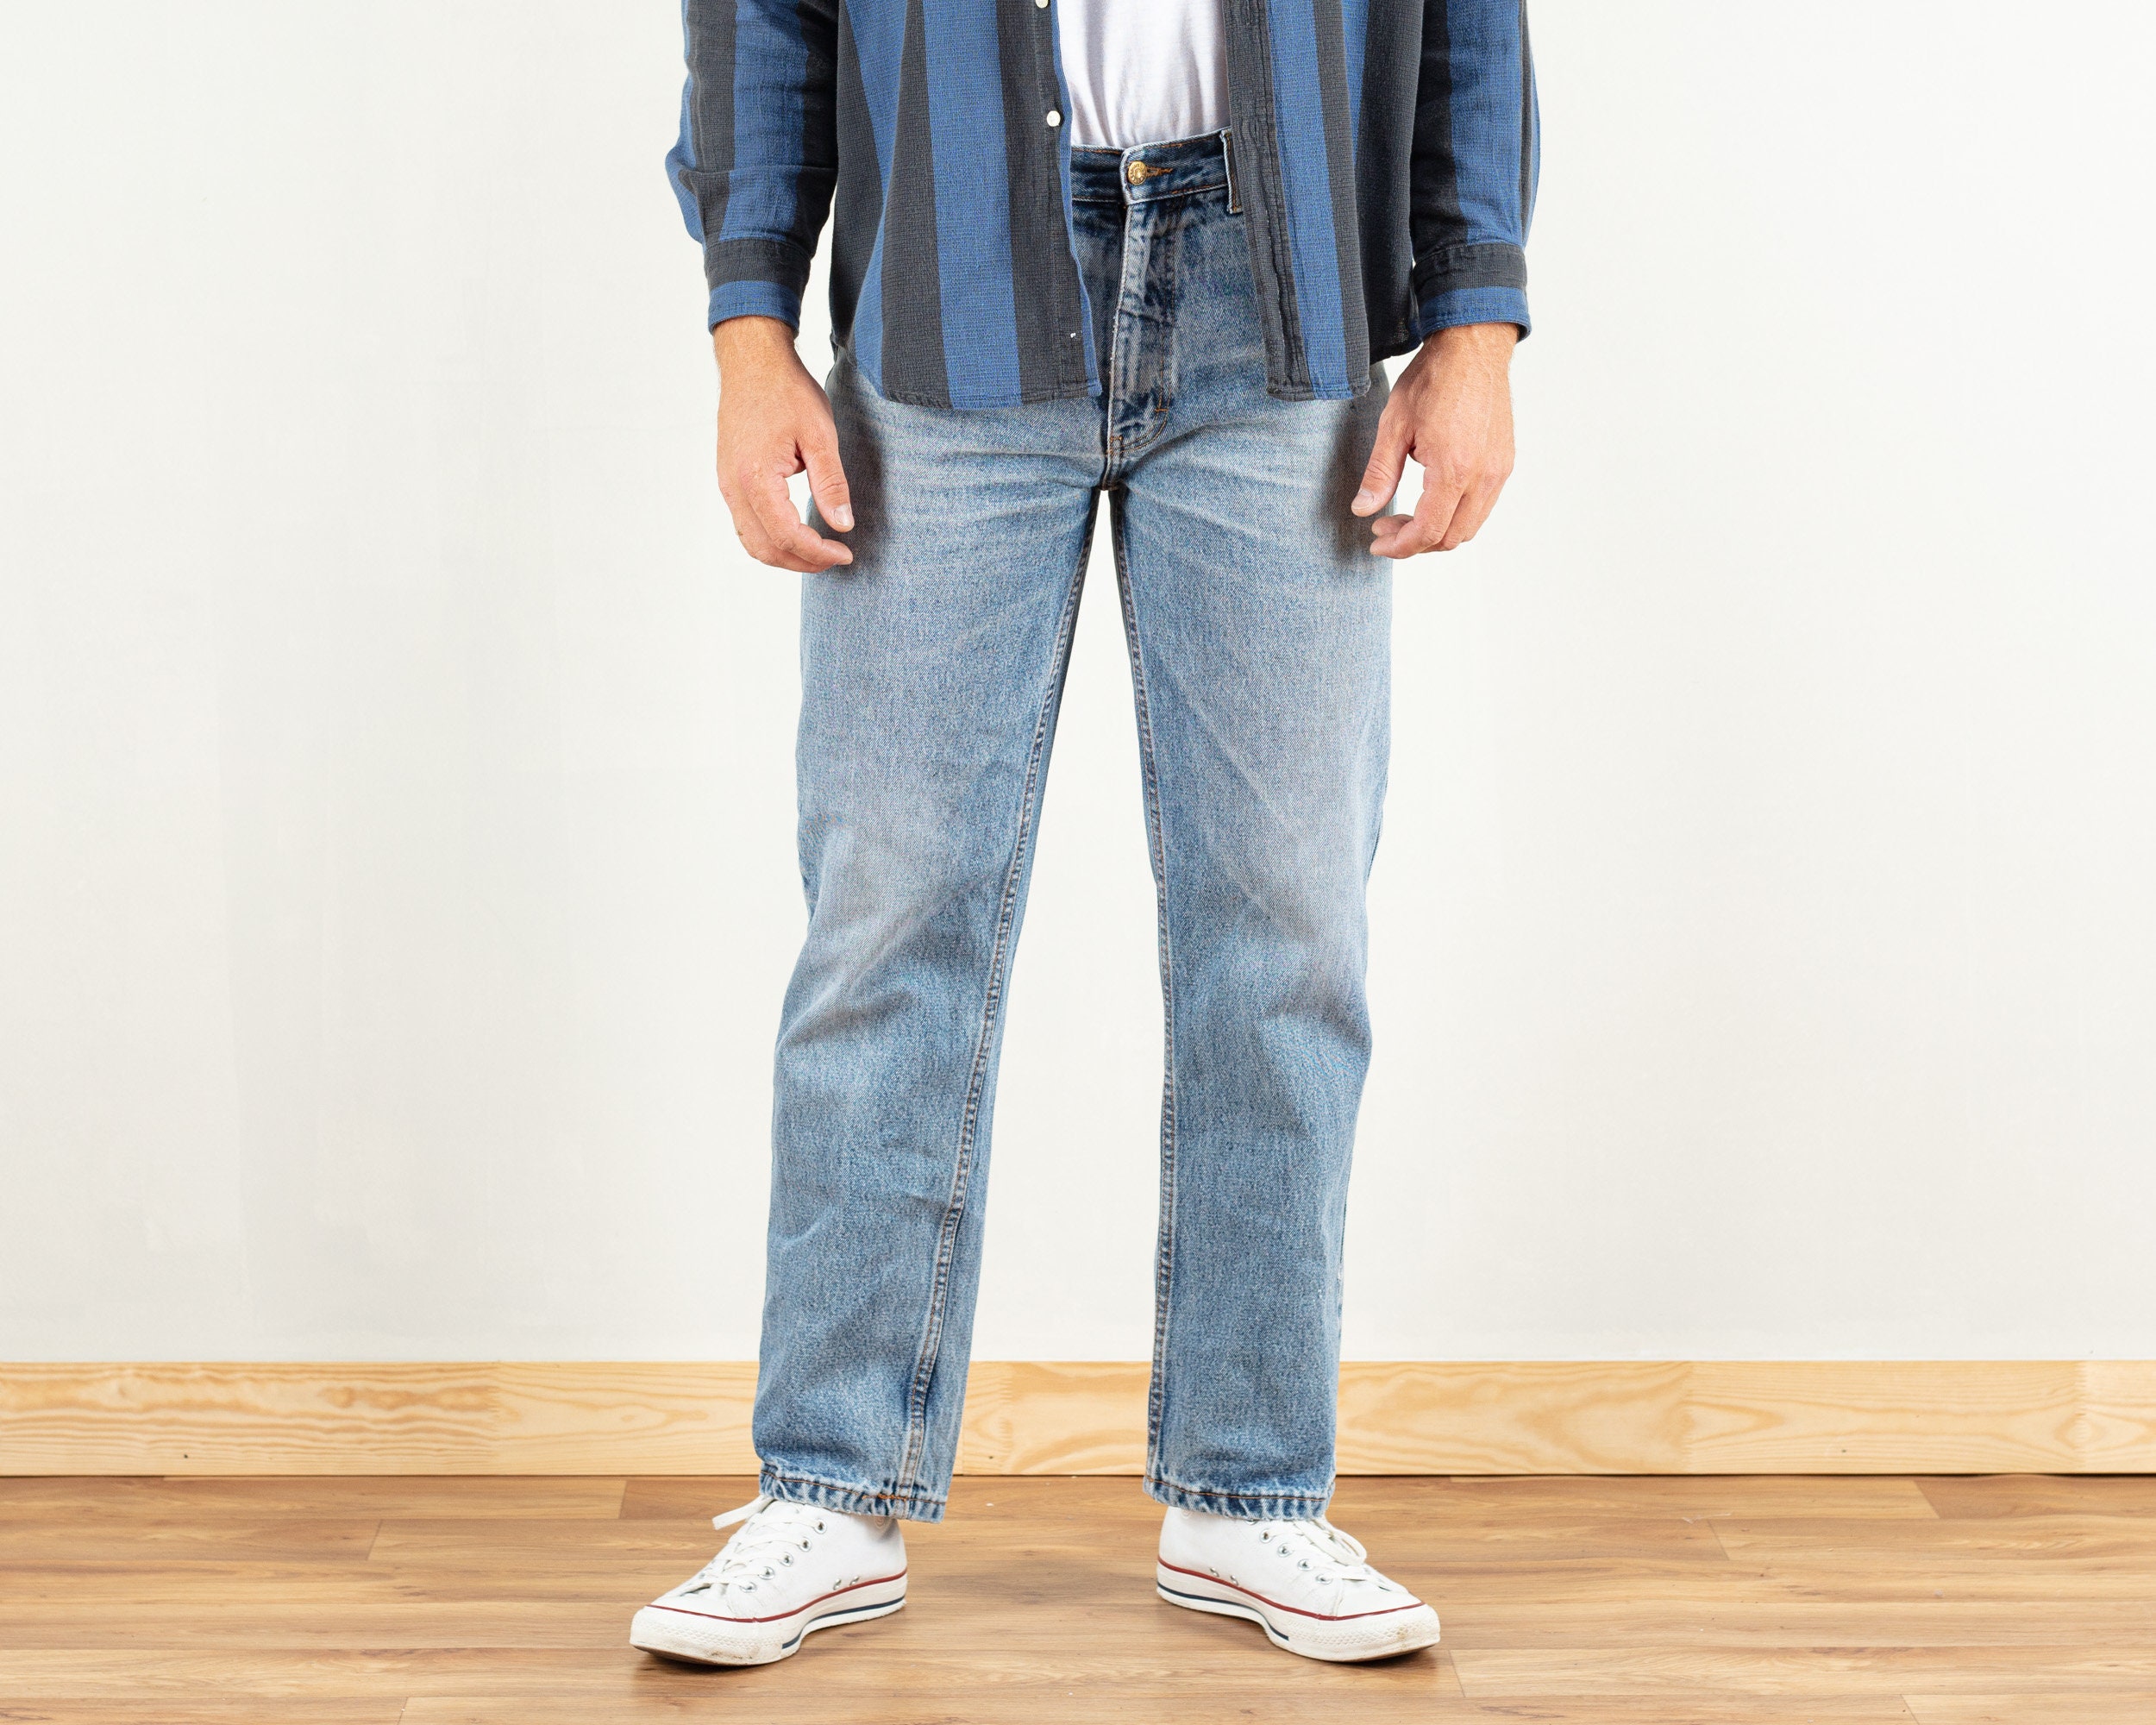 Vintage Men Jeans Light Wash Jeans Denim Pants Men Vintage 90s Men